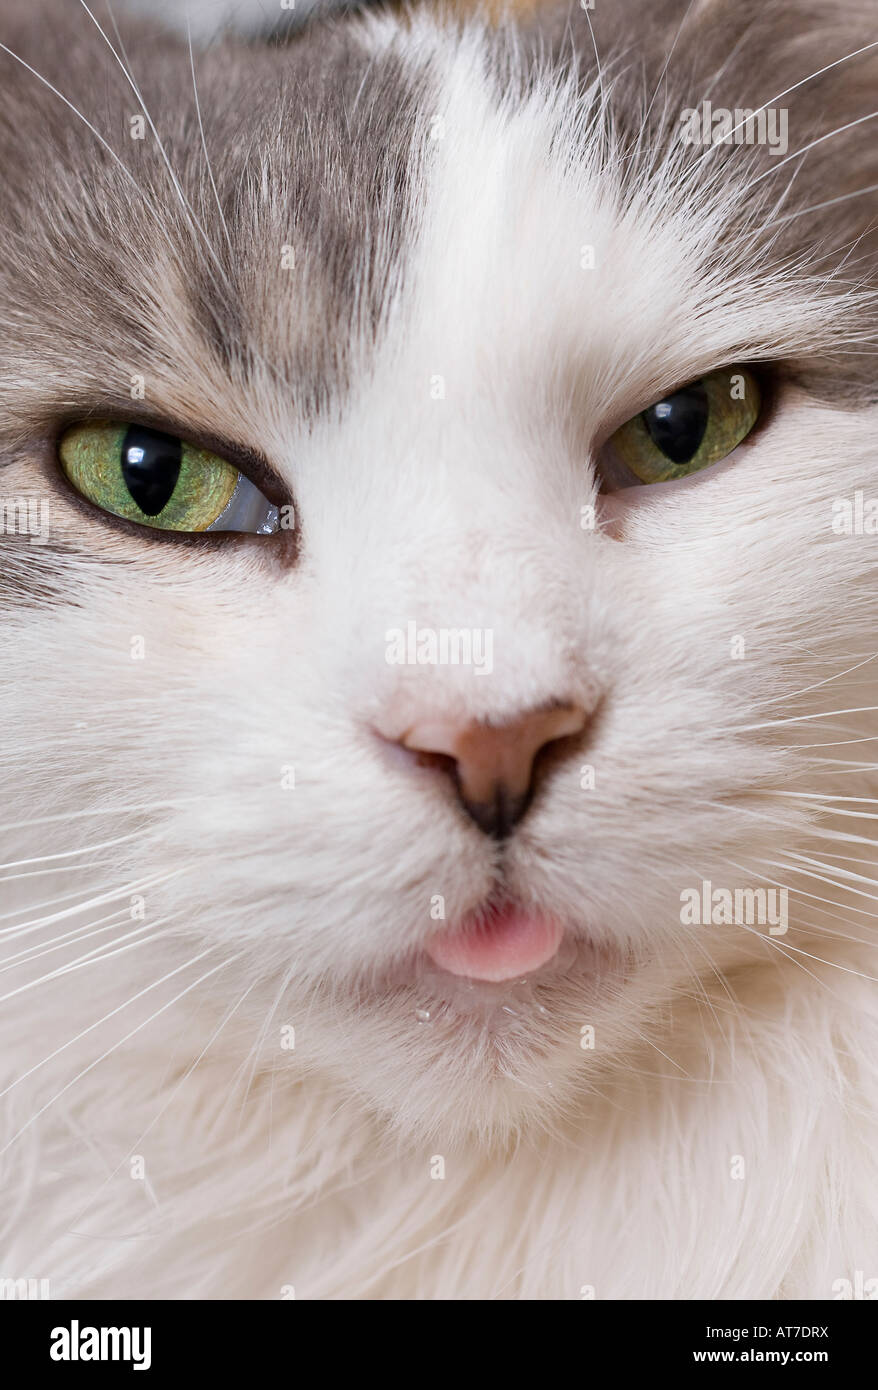 fluffy face cat